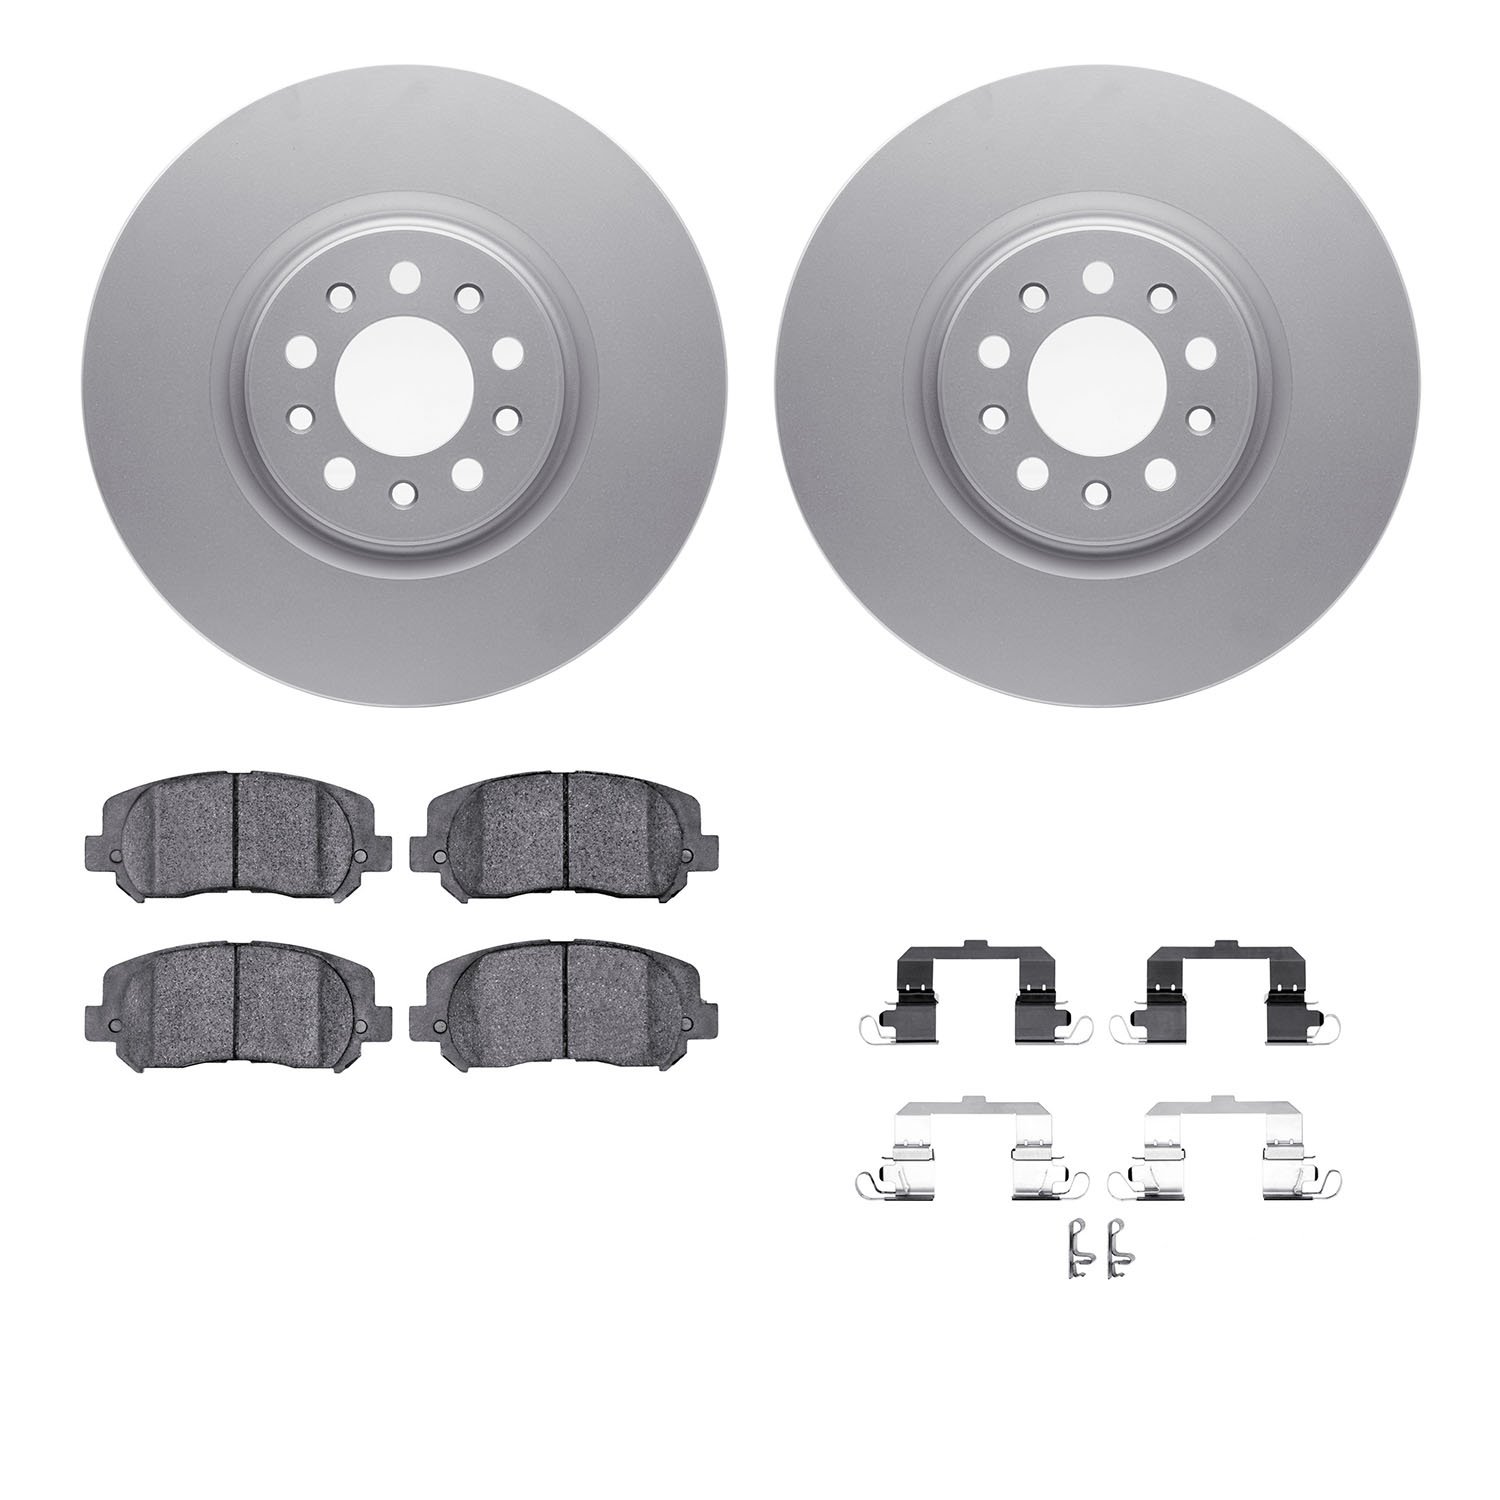 4412-42015 Geospec Brake Rotors with Ultimate-Duty Brake Pads & Hardware, Fits Select Mopar, Position: Front